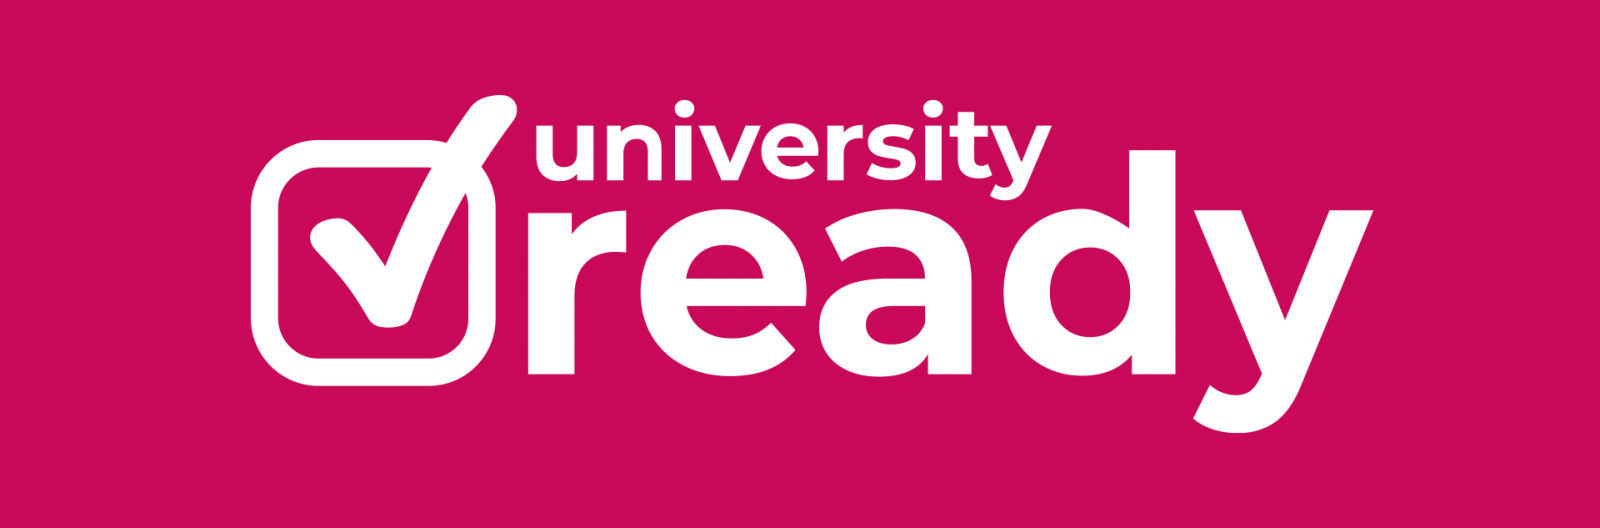 University Ready logo